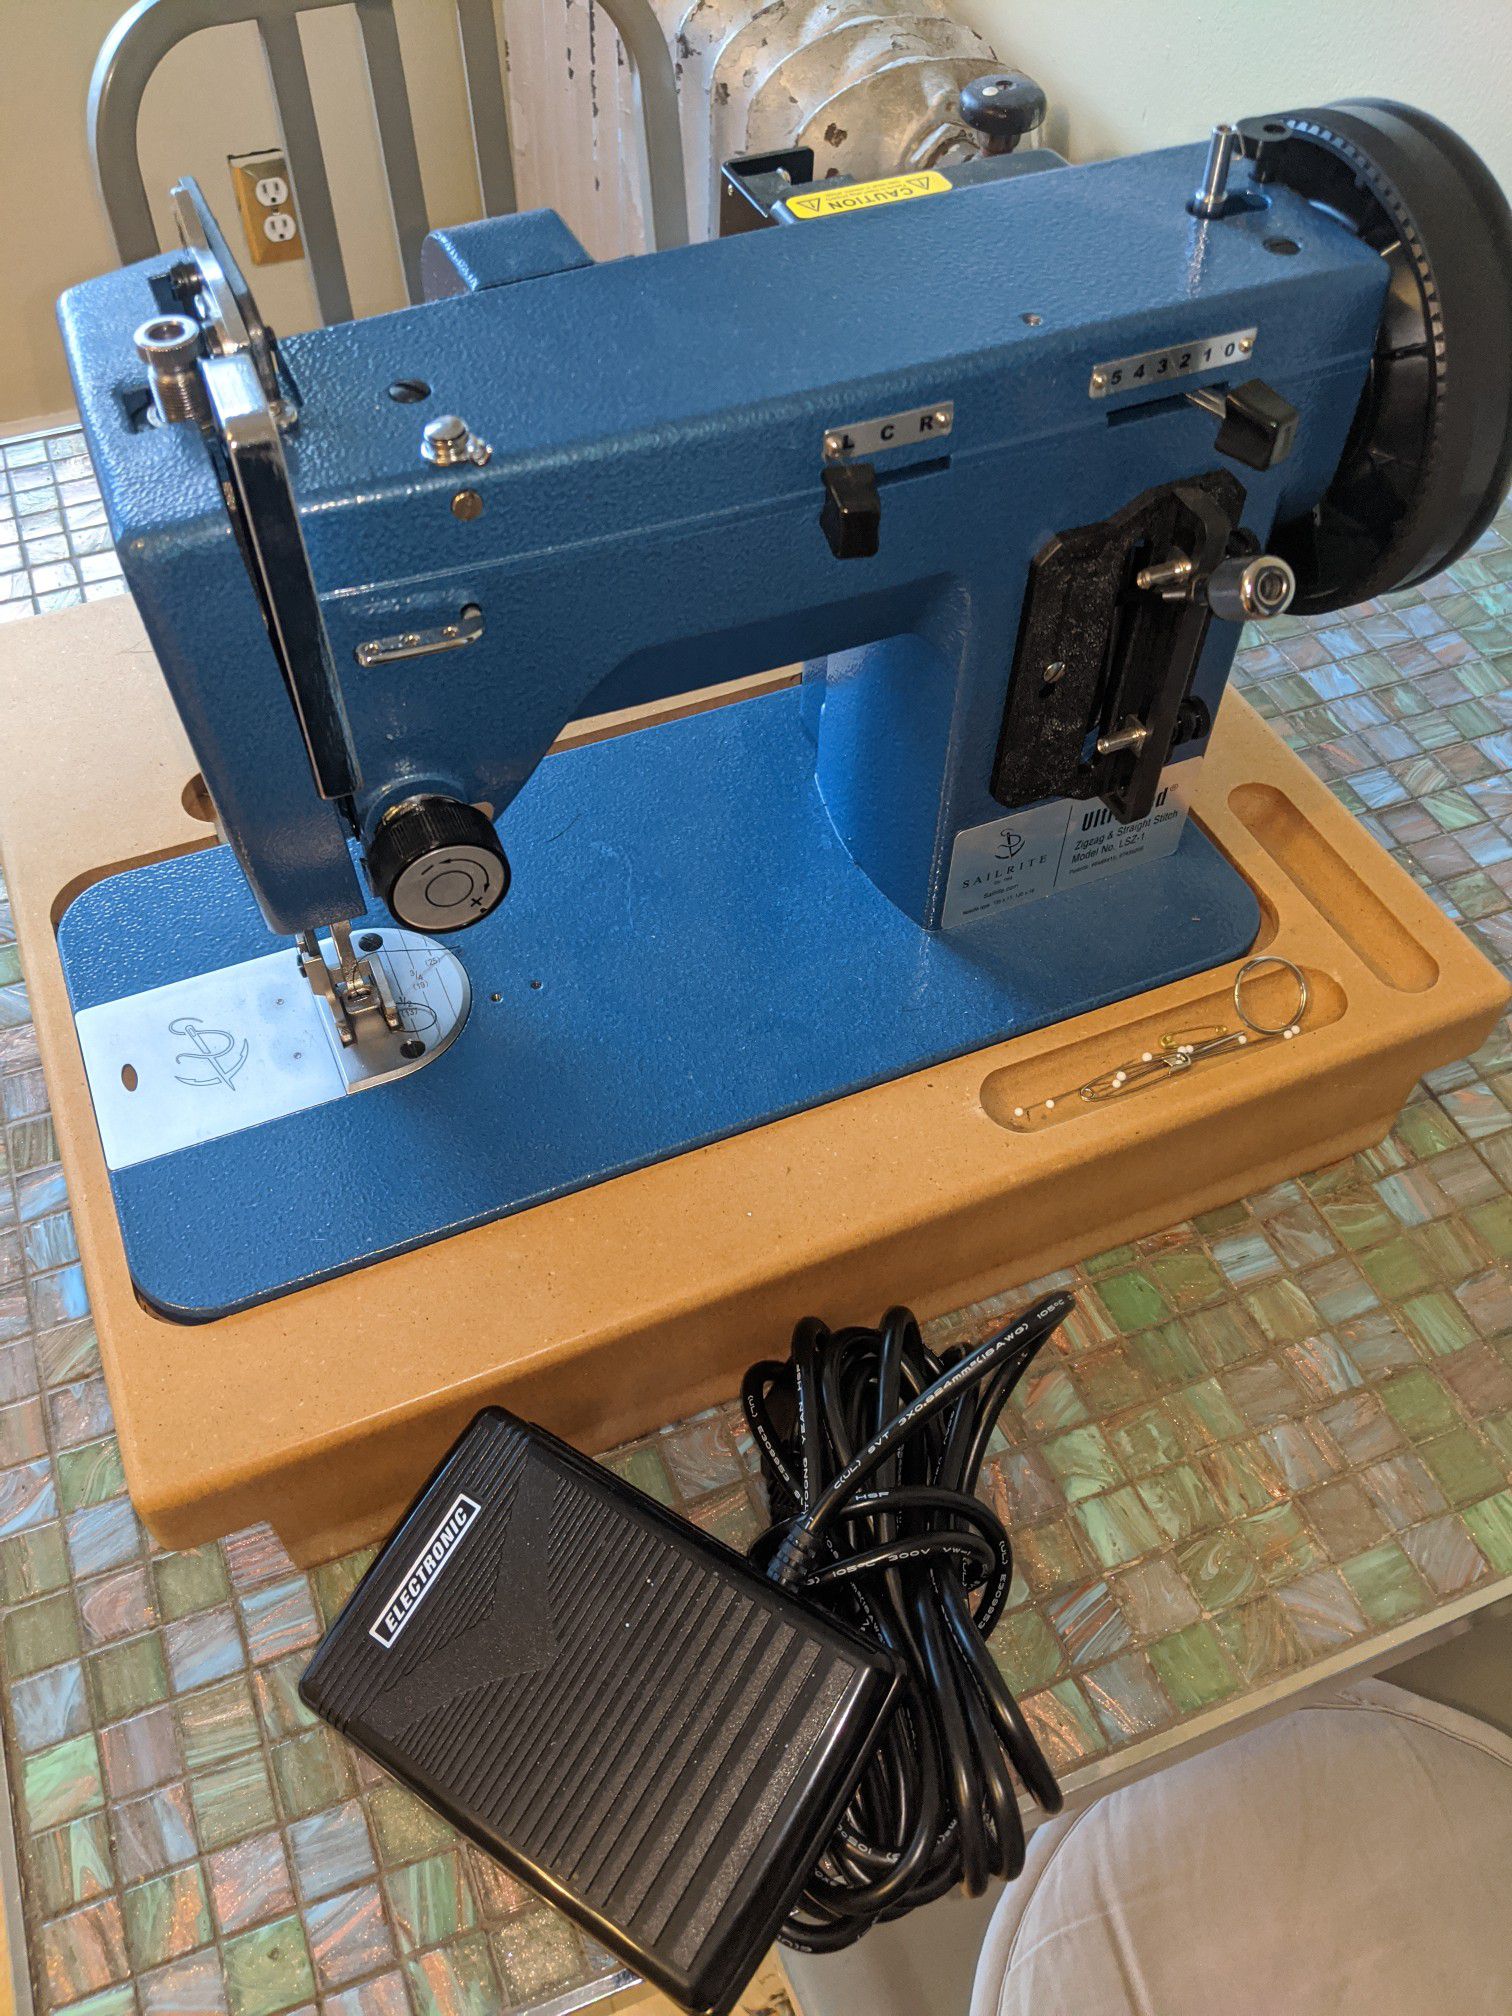 Sailrite Ultrafeed LSZ-1 Portable Industrial Walking Foot Sewing Machine